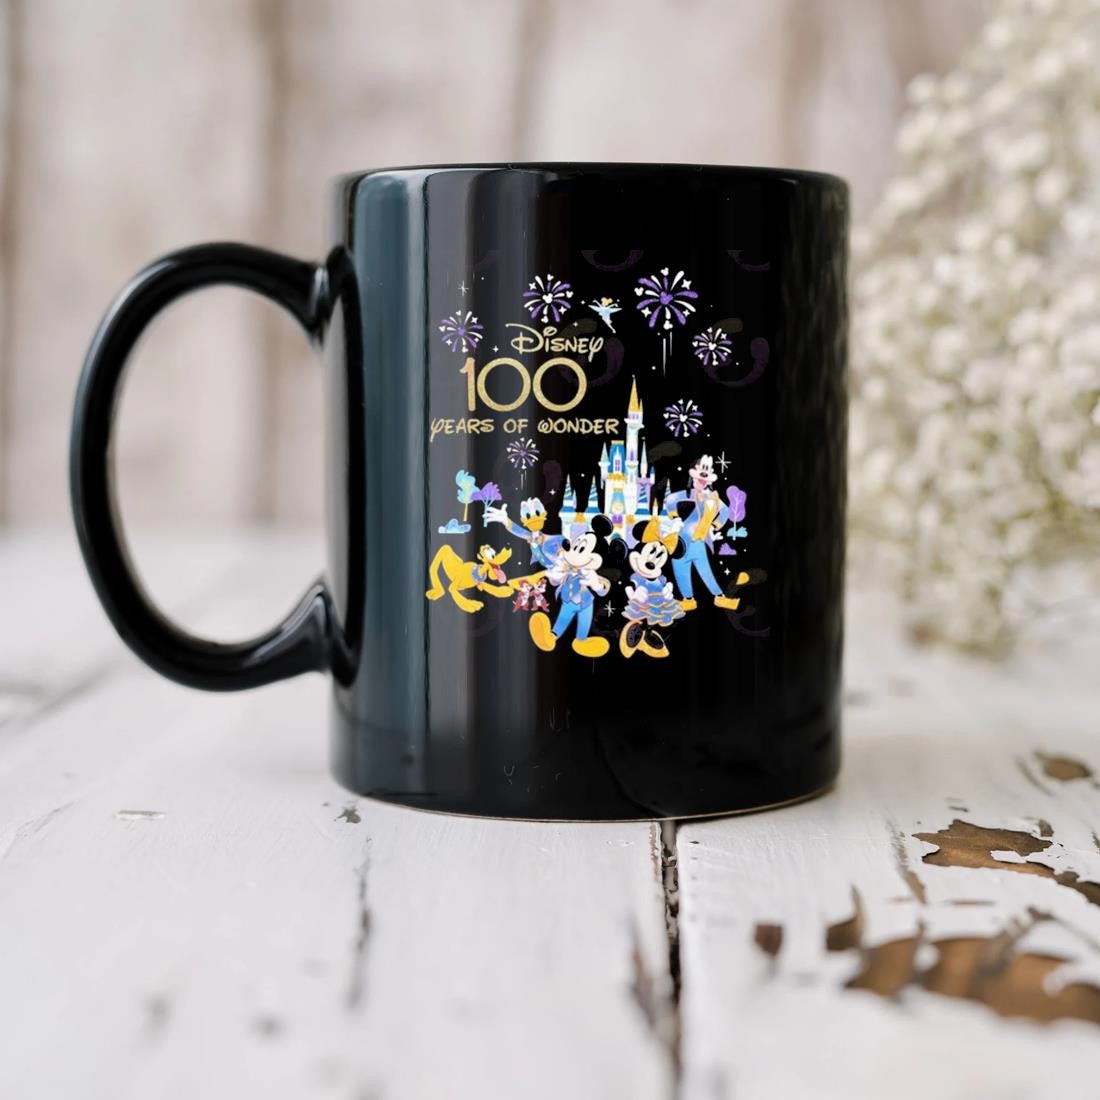 Disney Mug Disney 100 Years Of Wonder 2023 News Mug biu.jpg